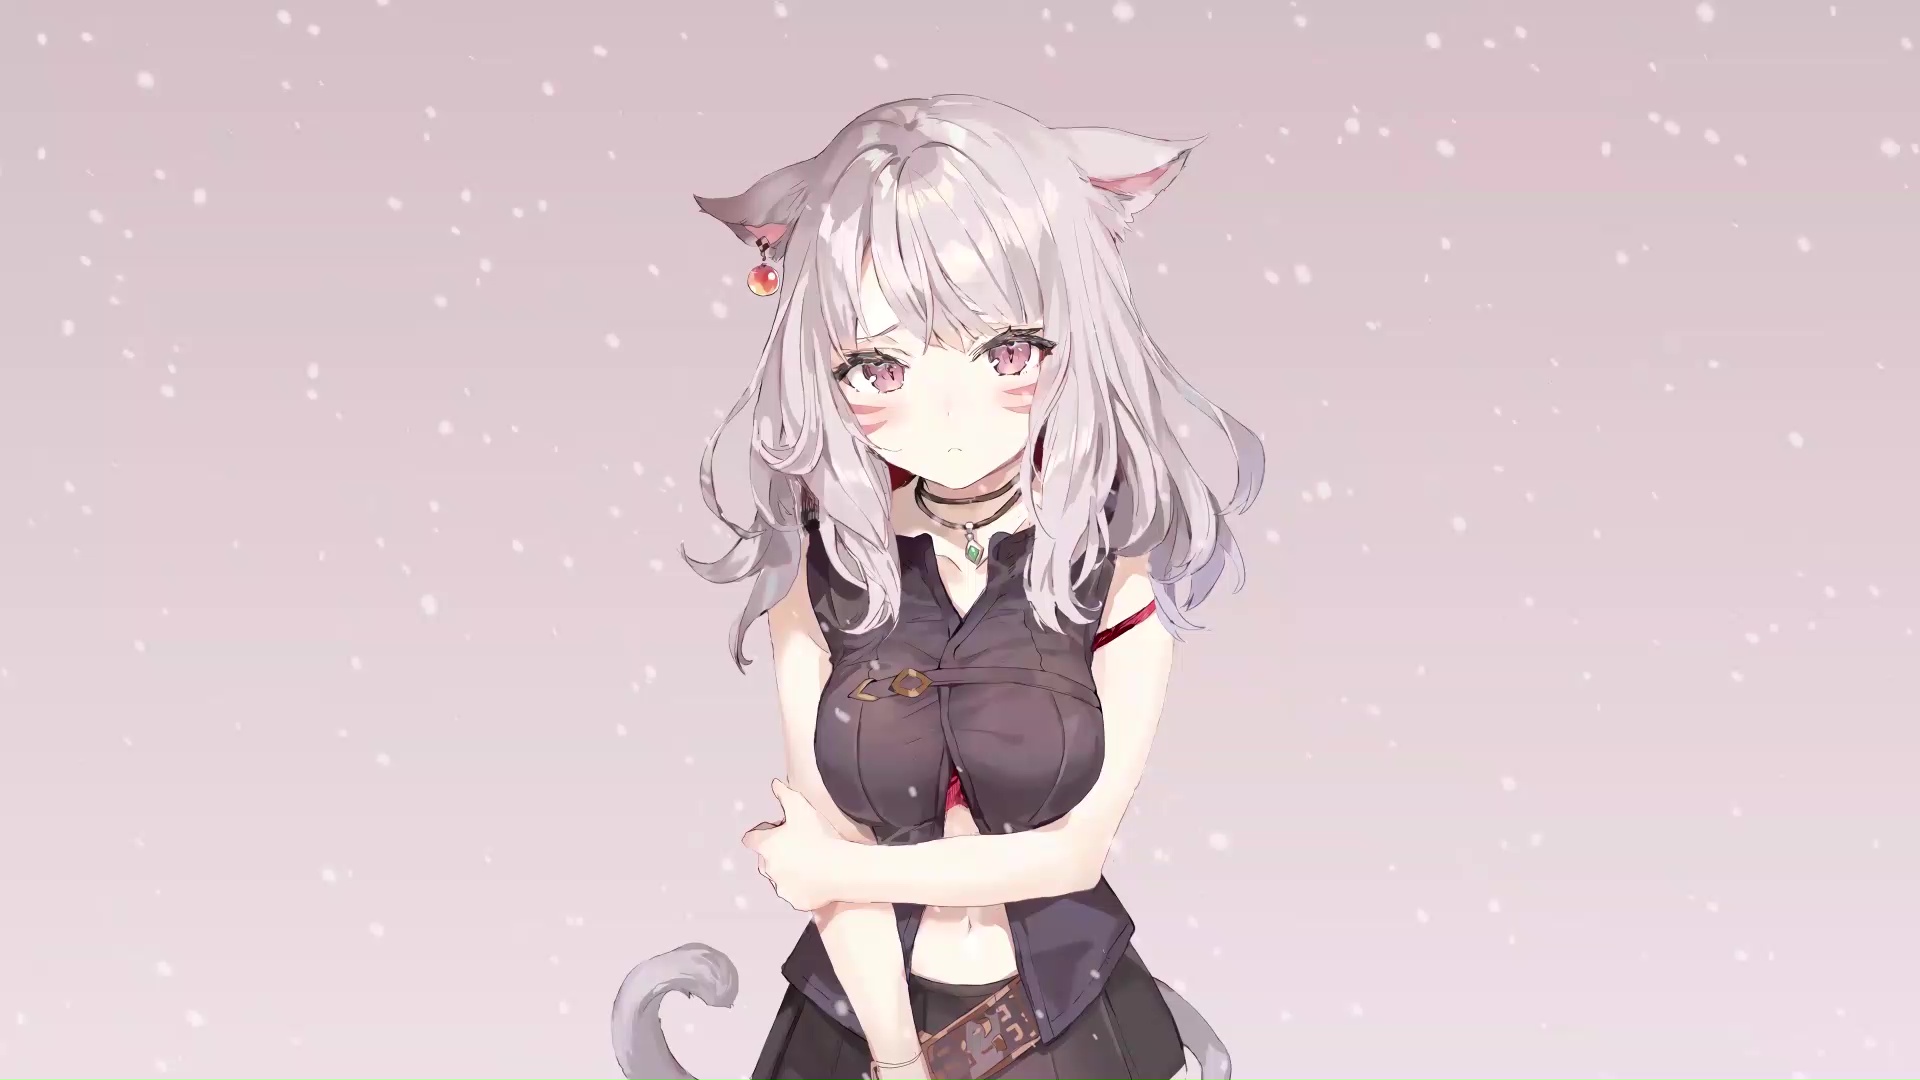 Create meme girl with cat ears anime girls with cat ears neko   Pictures  Memearsenalcom